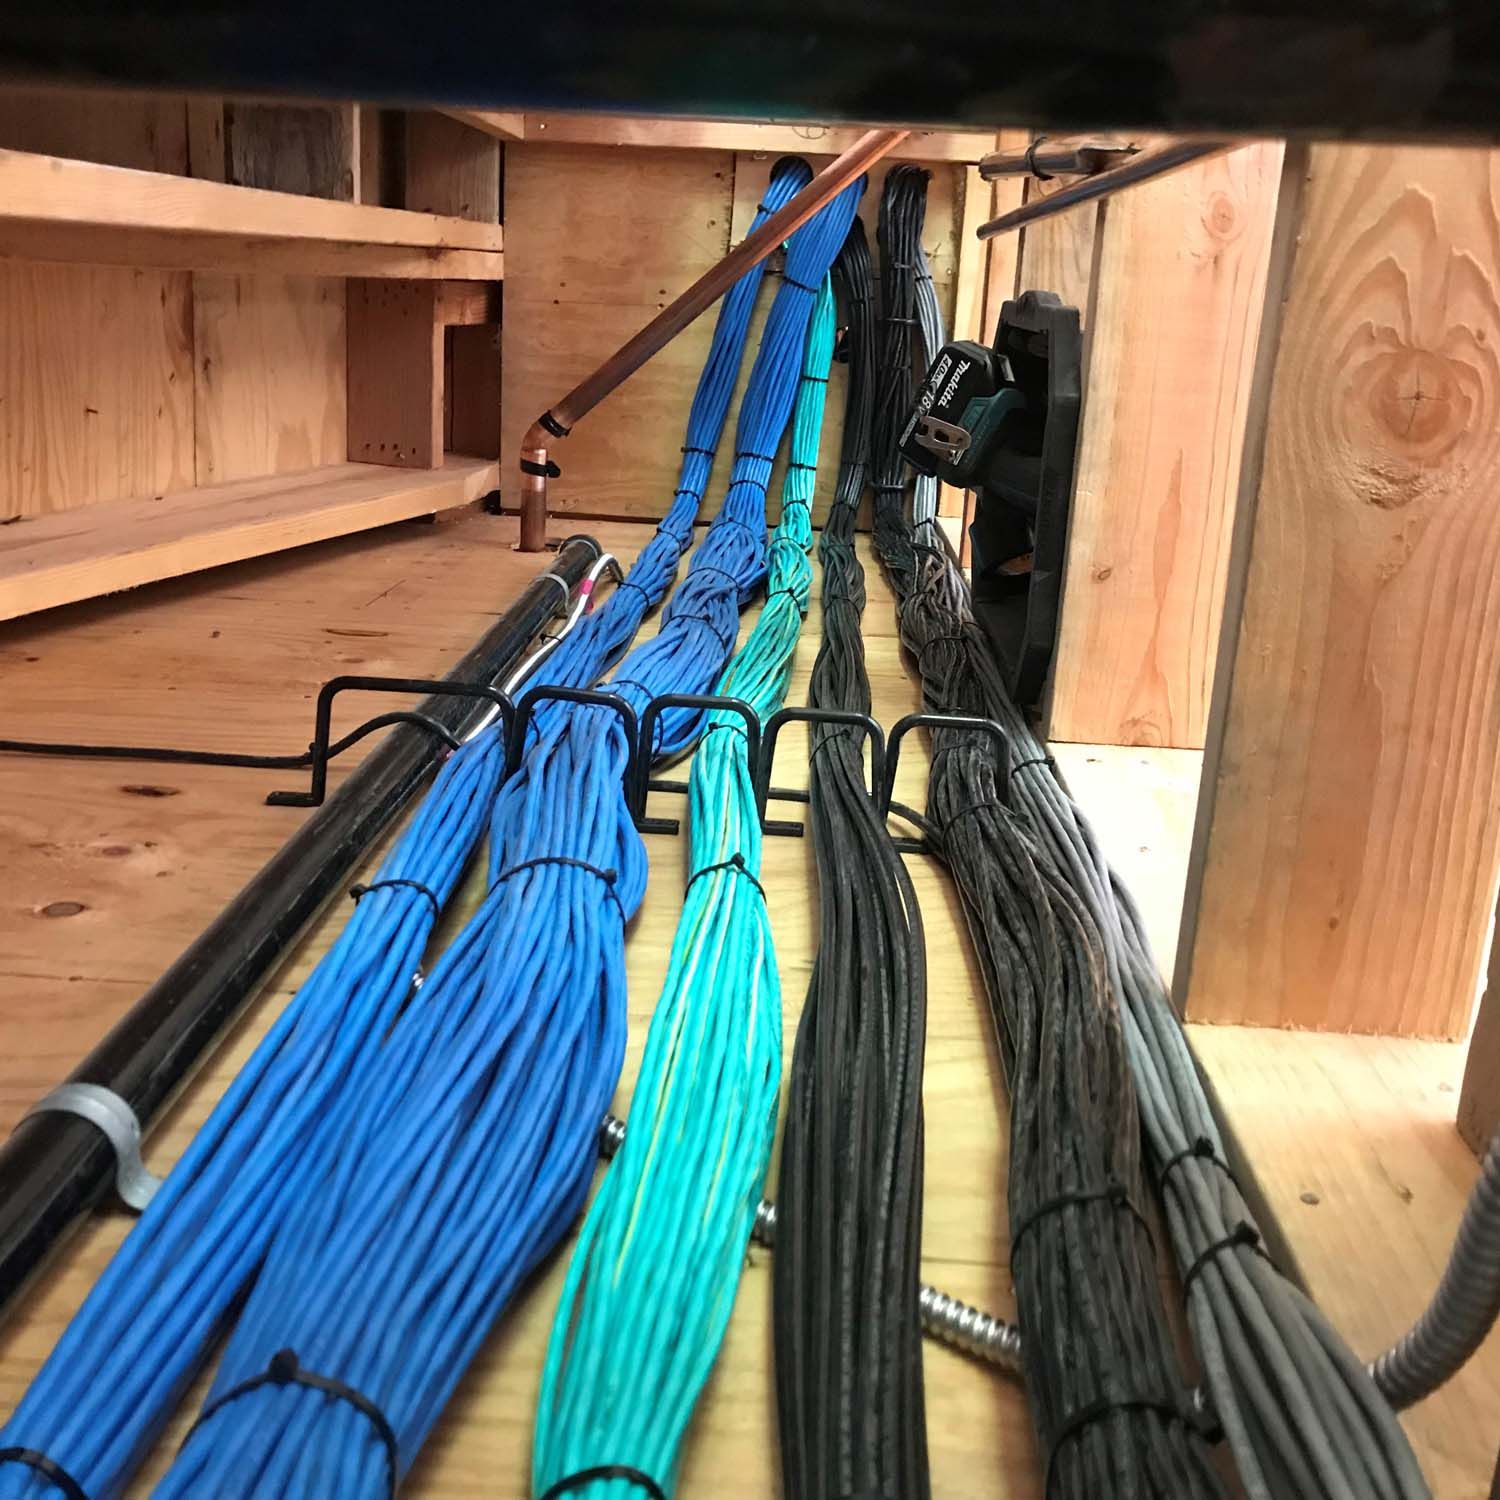 Wiring Racks, Racks, Networking, Cords, Organized